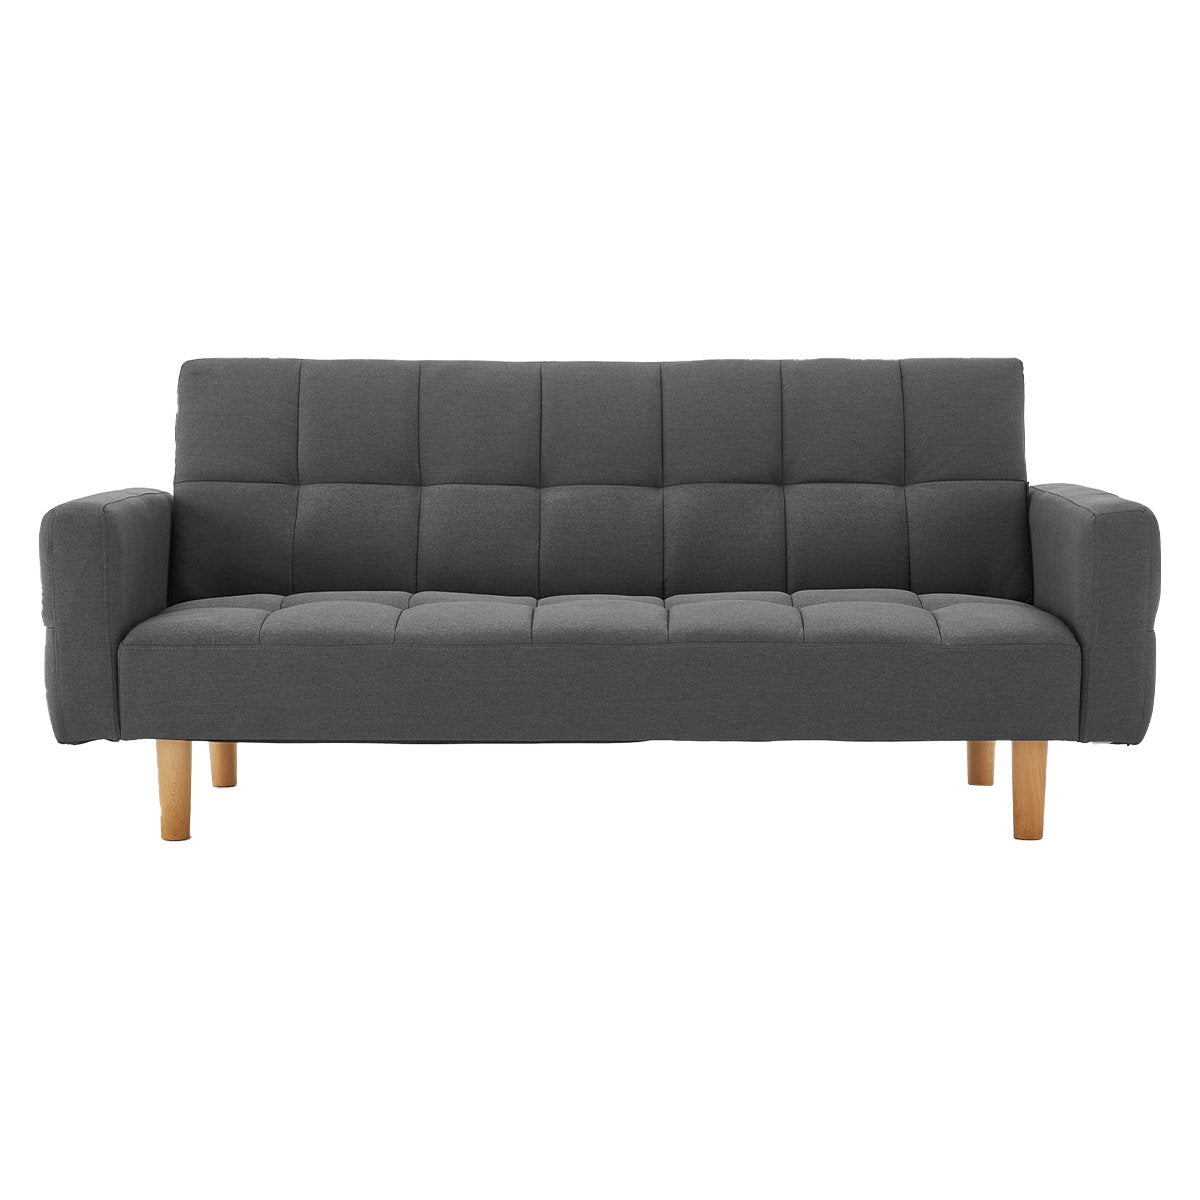 Morgana 3-Seater Fabric Futon Sofa Bed - Dark Grey